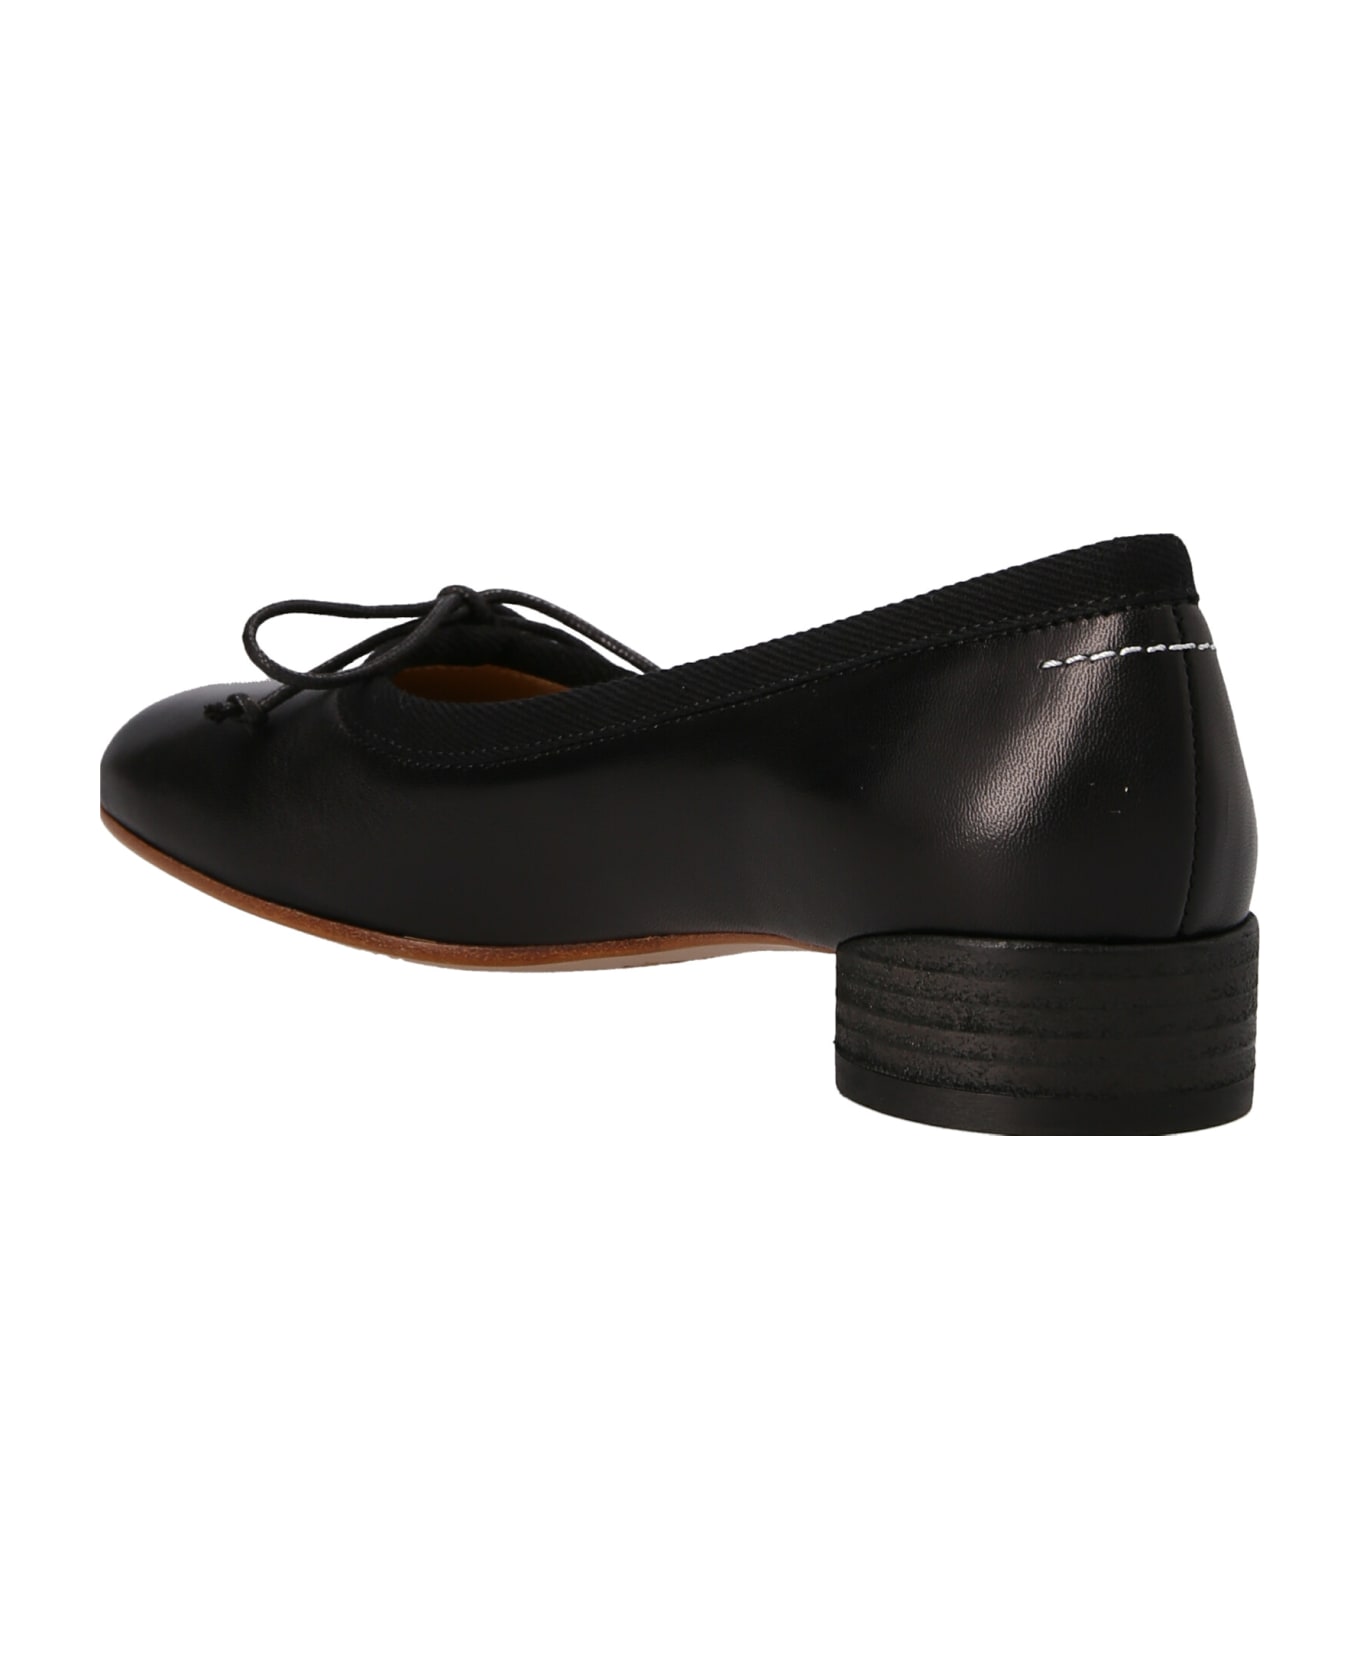 MM6 Maison Margiela Leather Ballet Flats - Black